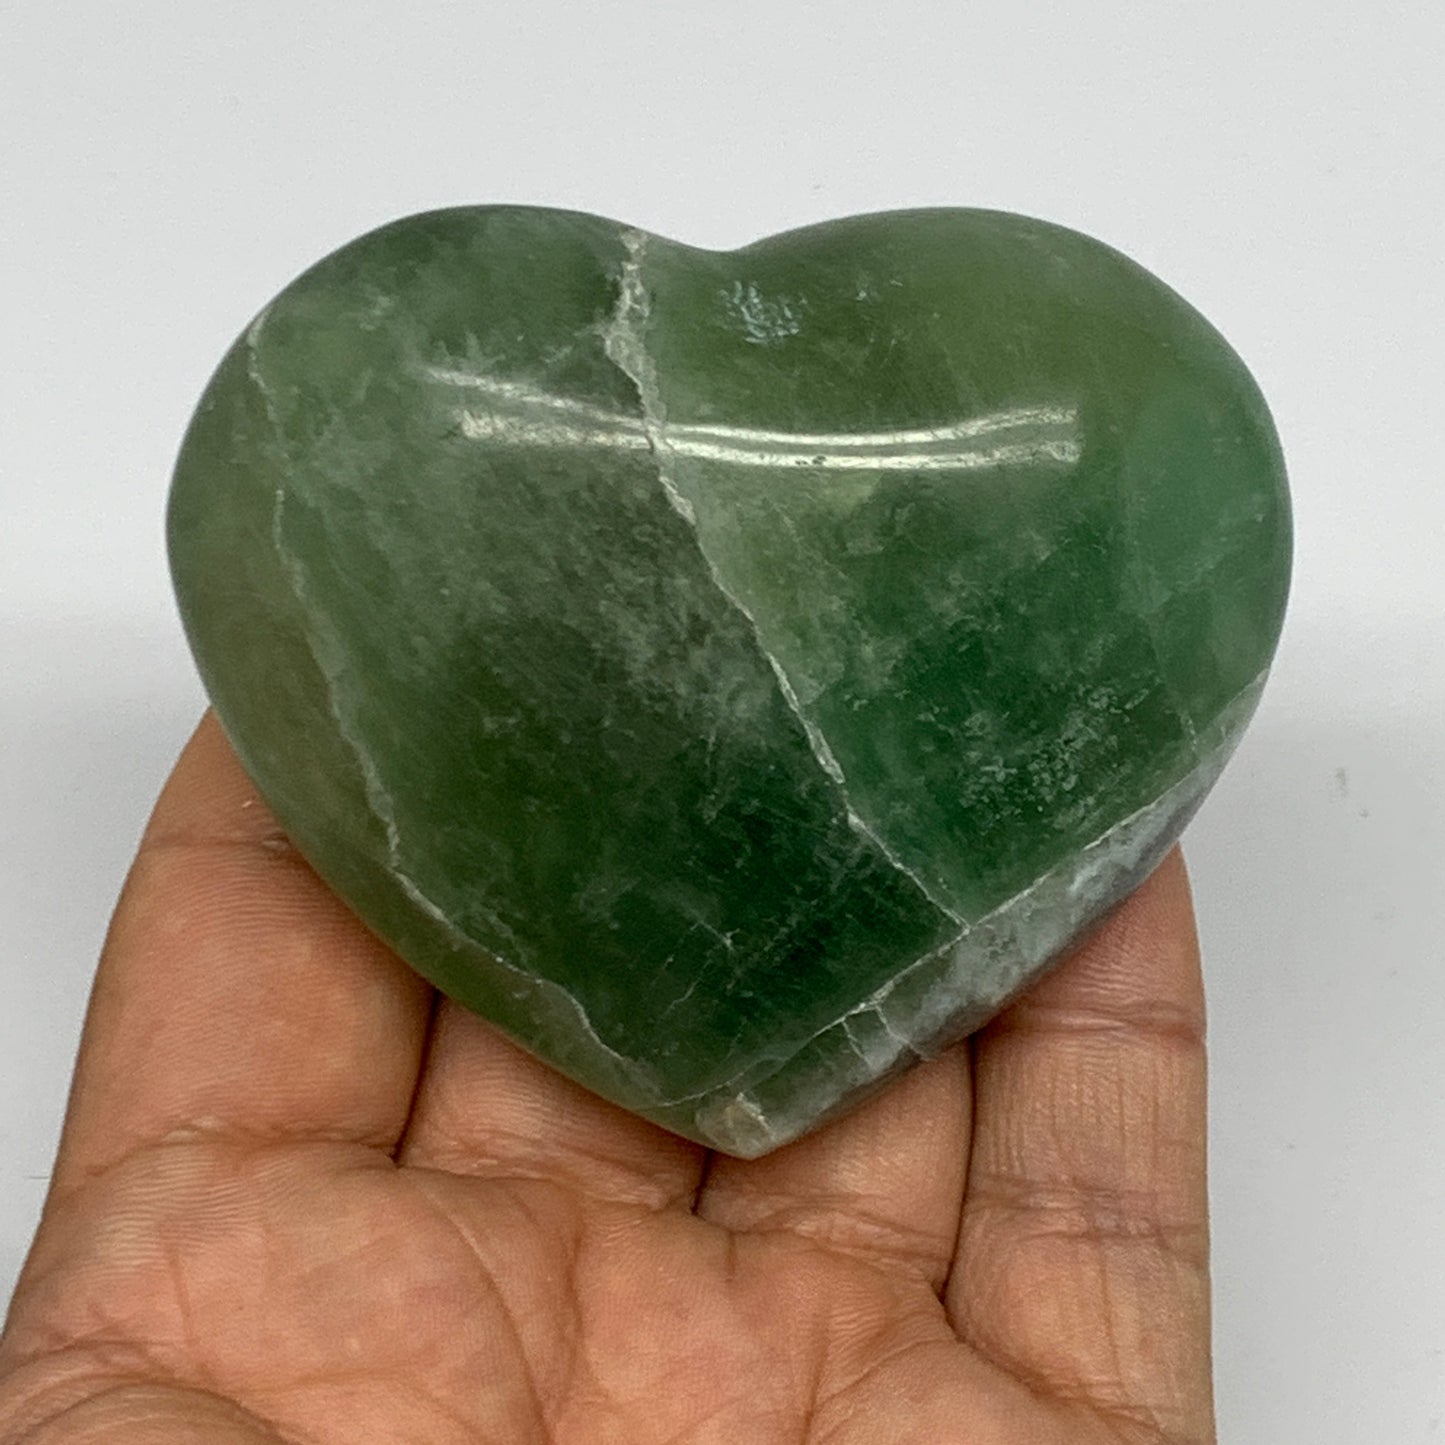 205.3g, 2.3" x 2.8" x 1.2" Fluorite Heart Healing Crystal @Madagascar, B17344